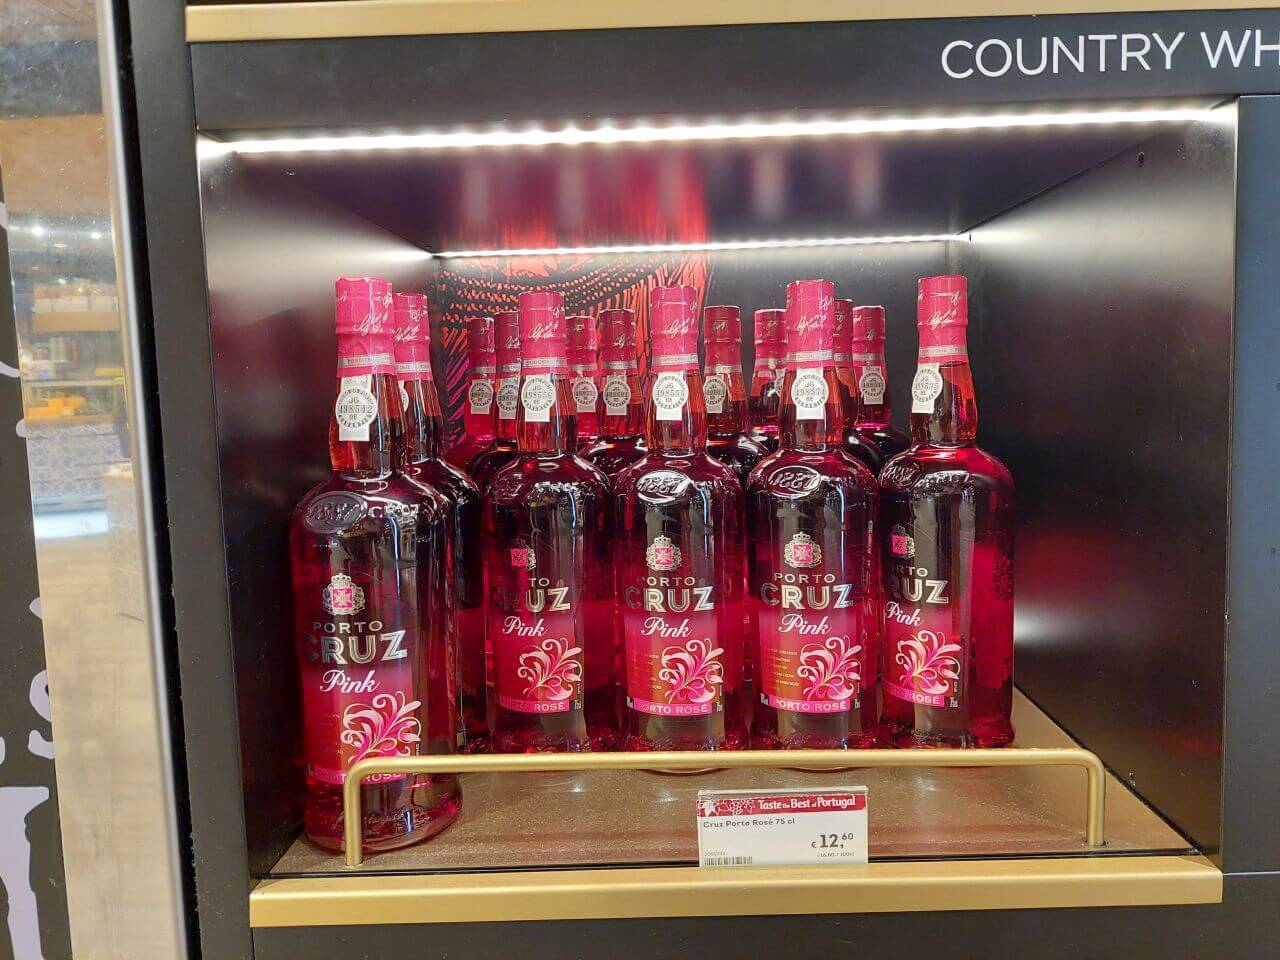 Láhve portského vína Porto Cruz Pink srovnané v regálu na letišti v Portu